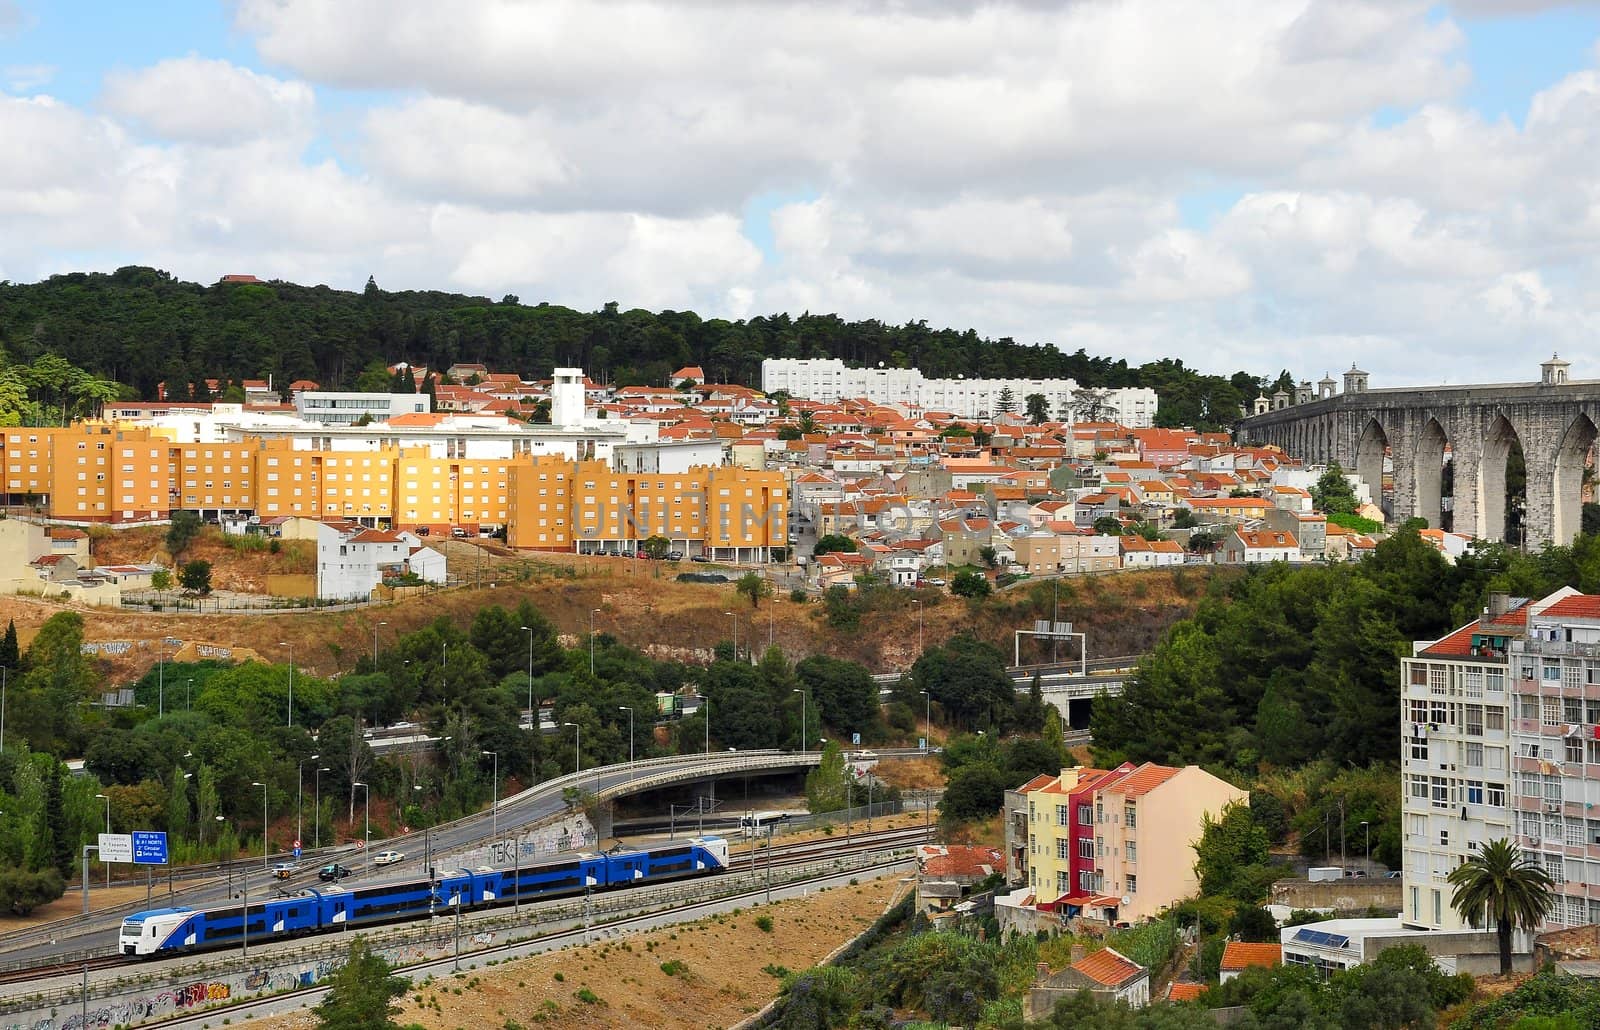 Old Lisbon transformed into a modern